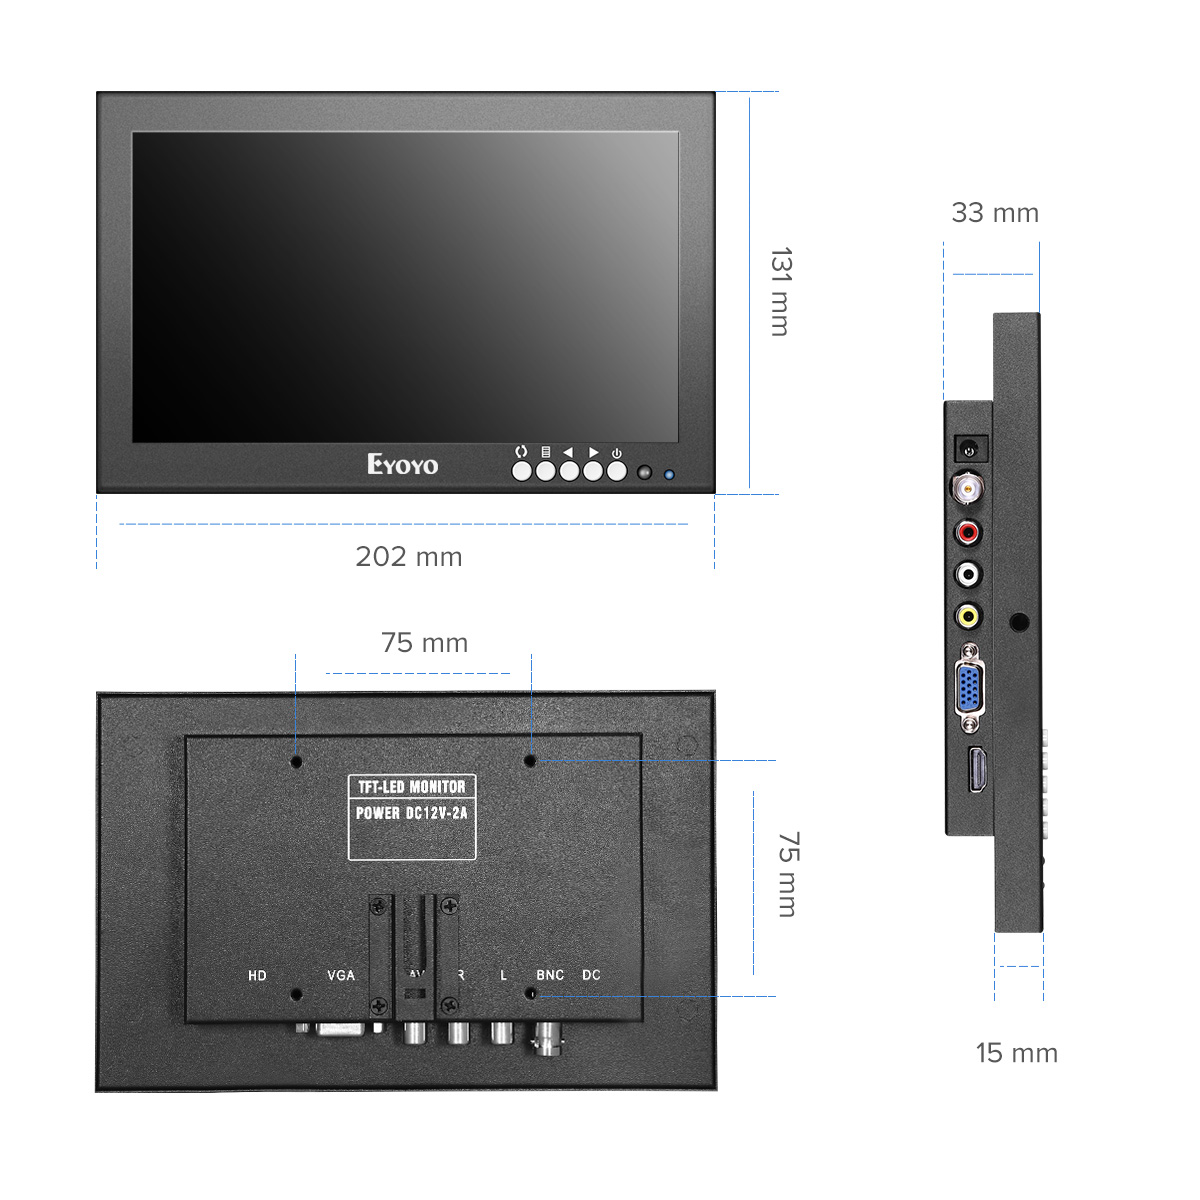 Eyoyo 8 inch Small HDMI LCD Monitor, Portable 1280x720 16:9 IPS Metal Housing Screen Support HDMI/VGA/AV/BNC Input